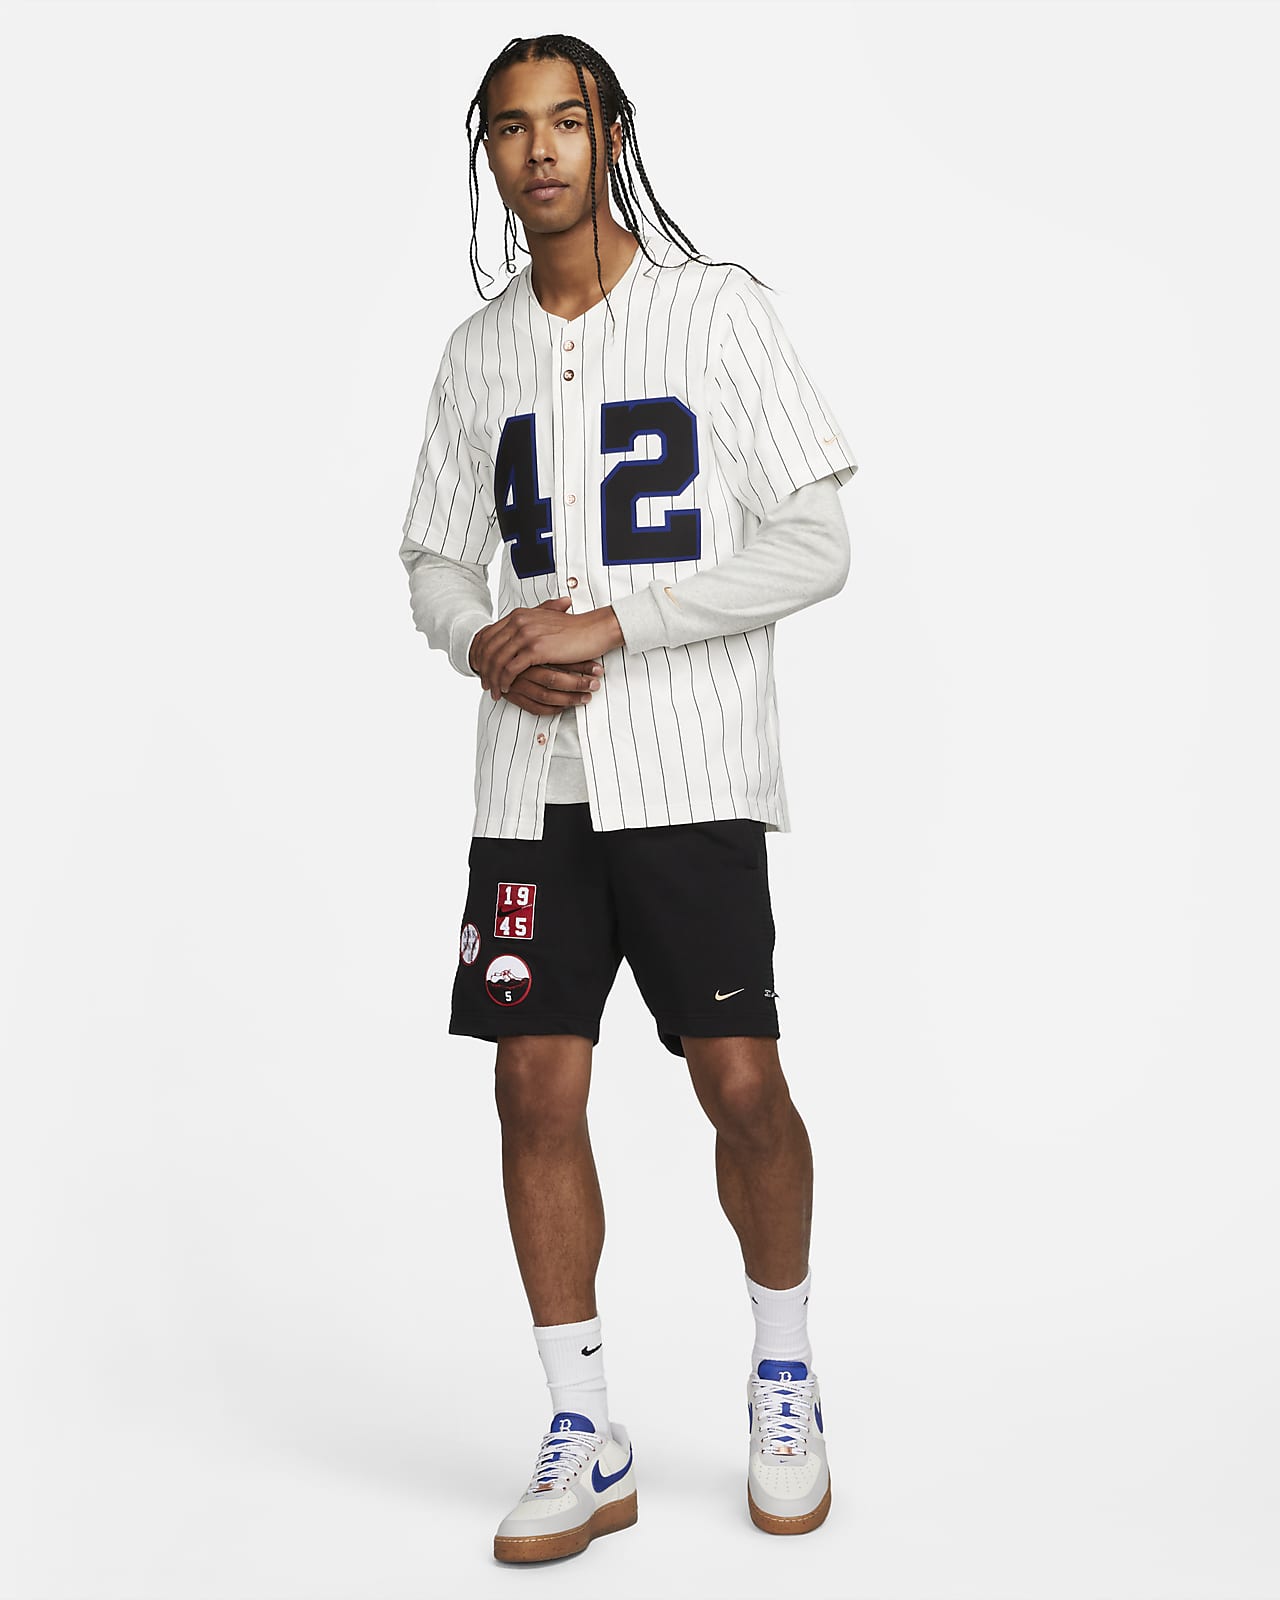 Nike Men's Graphic Baseball Jersey.